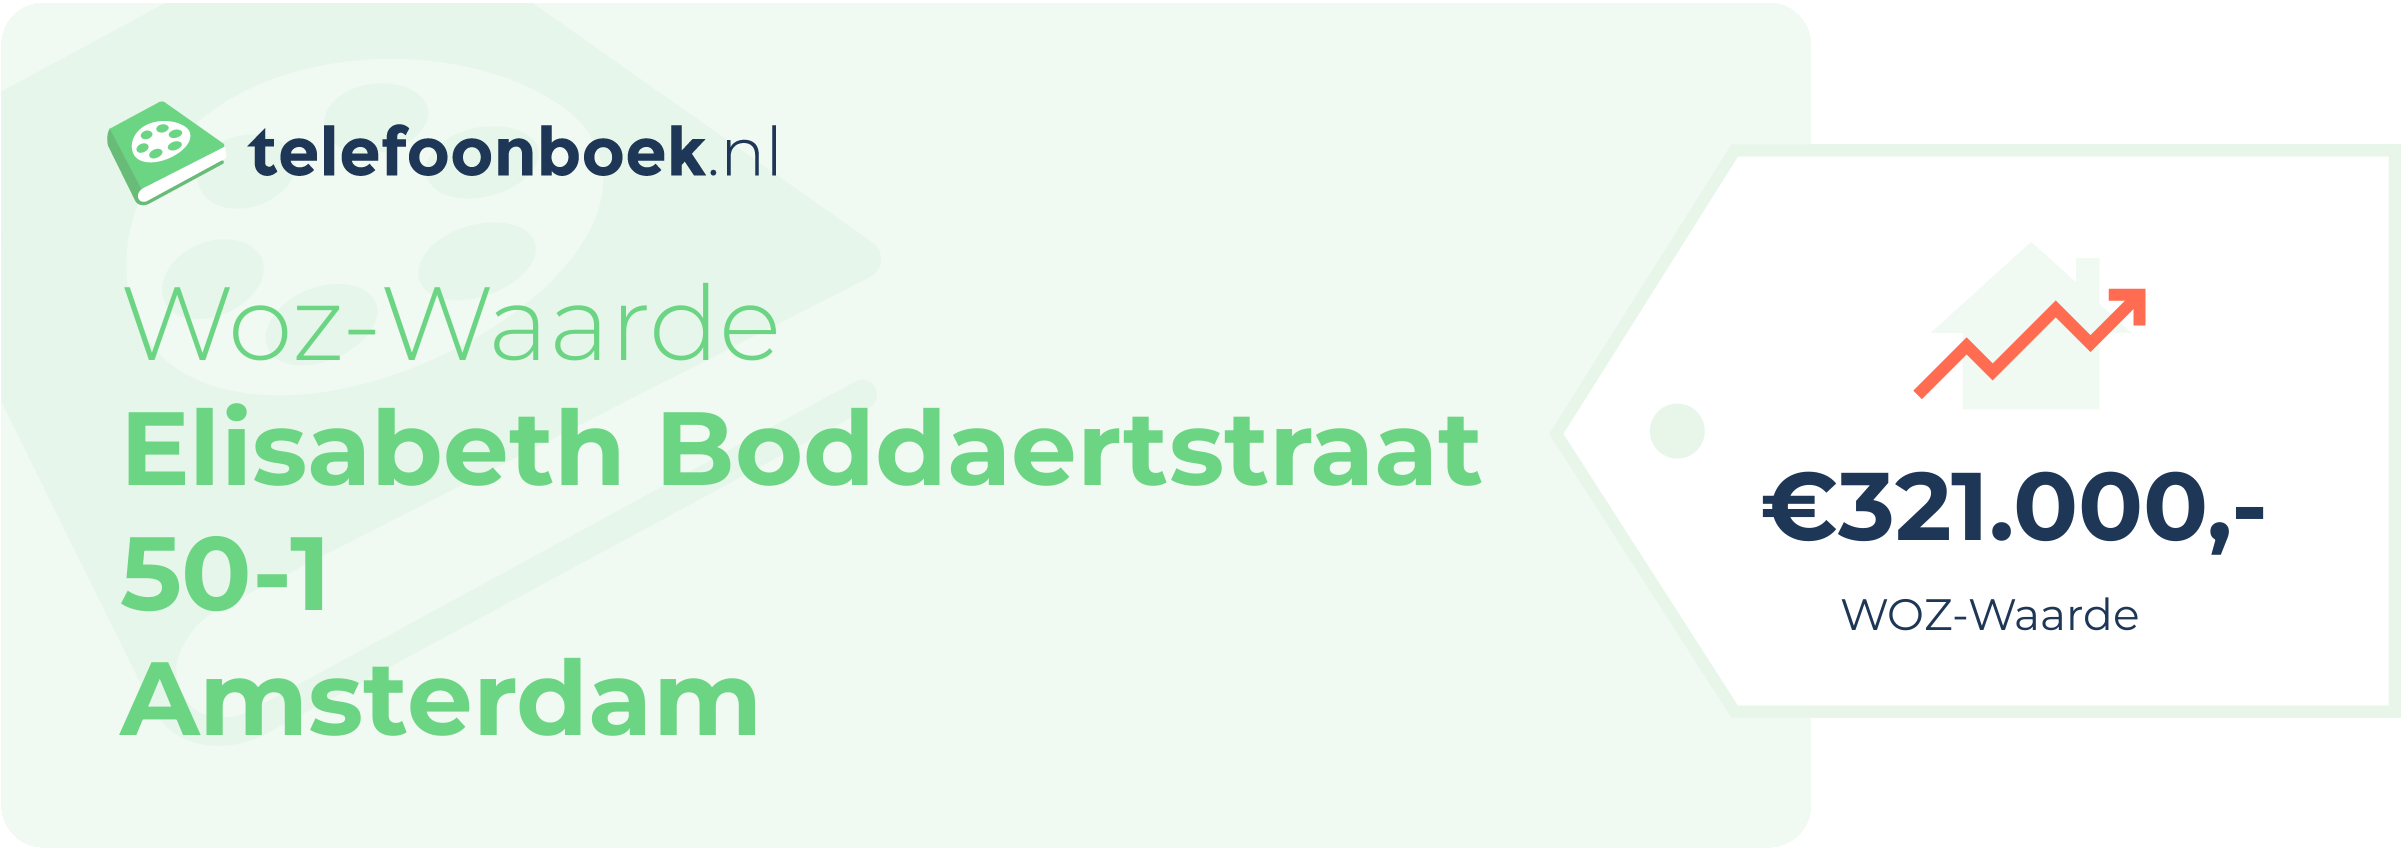 WOZ-waarde Elisabeth Boddaertstraat 50-1 Amsterdam